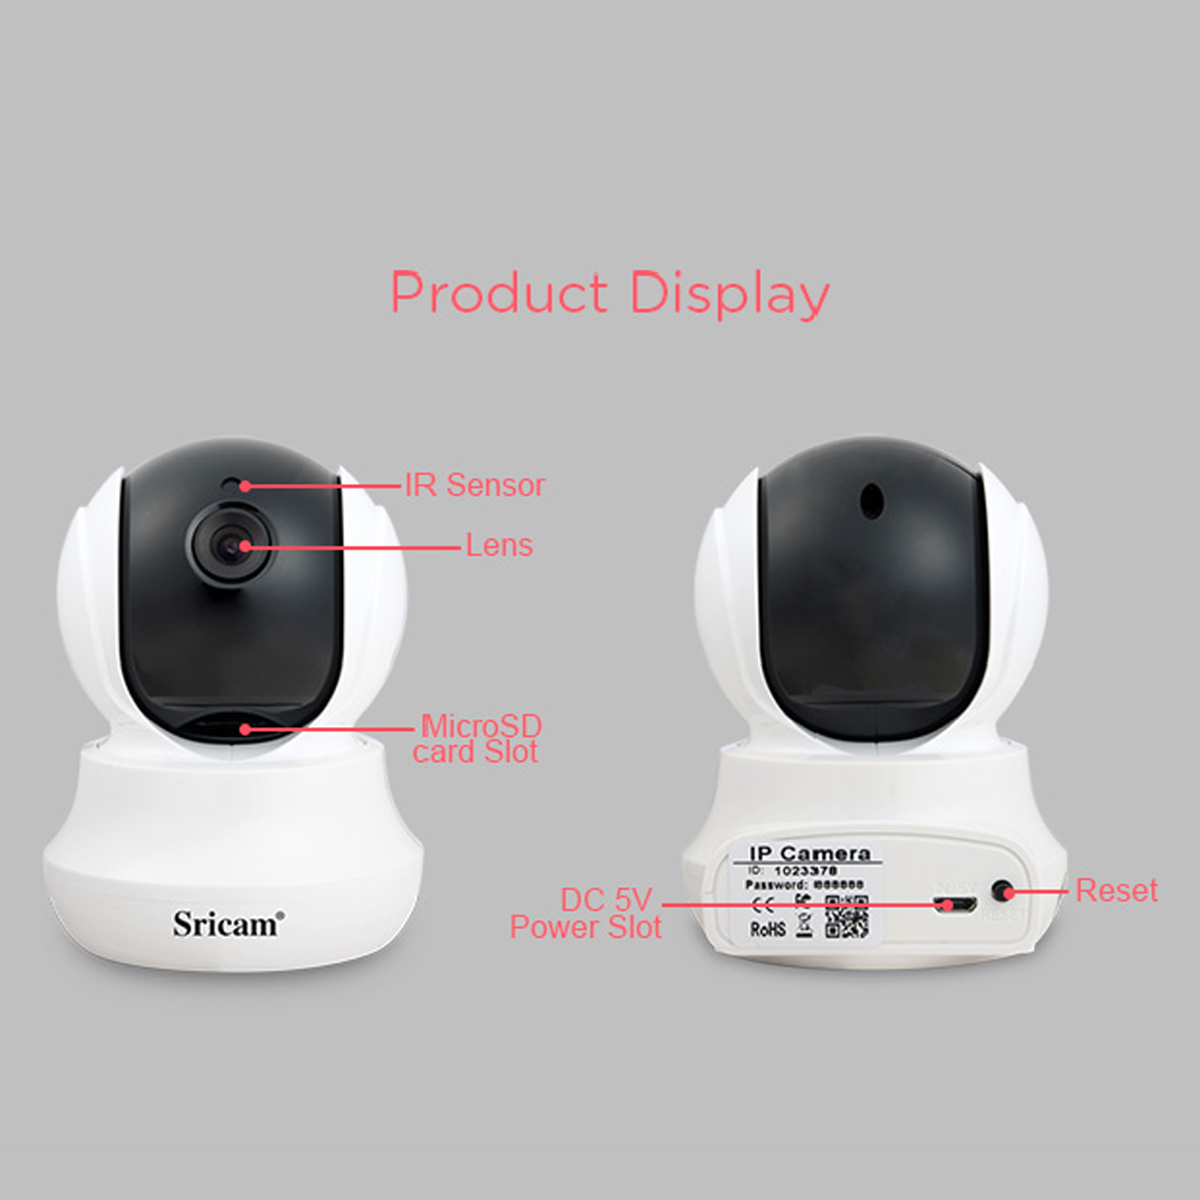 Sricam SP020 Wireless 720P IP Camera Pan&Tilt Home Security PTZ IR Night Vision WiFi Webcam 19